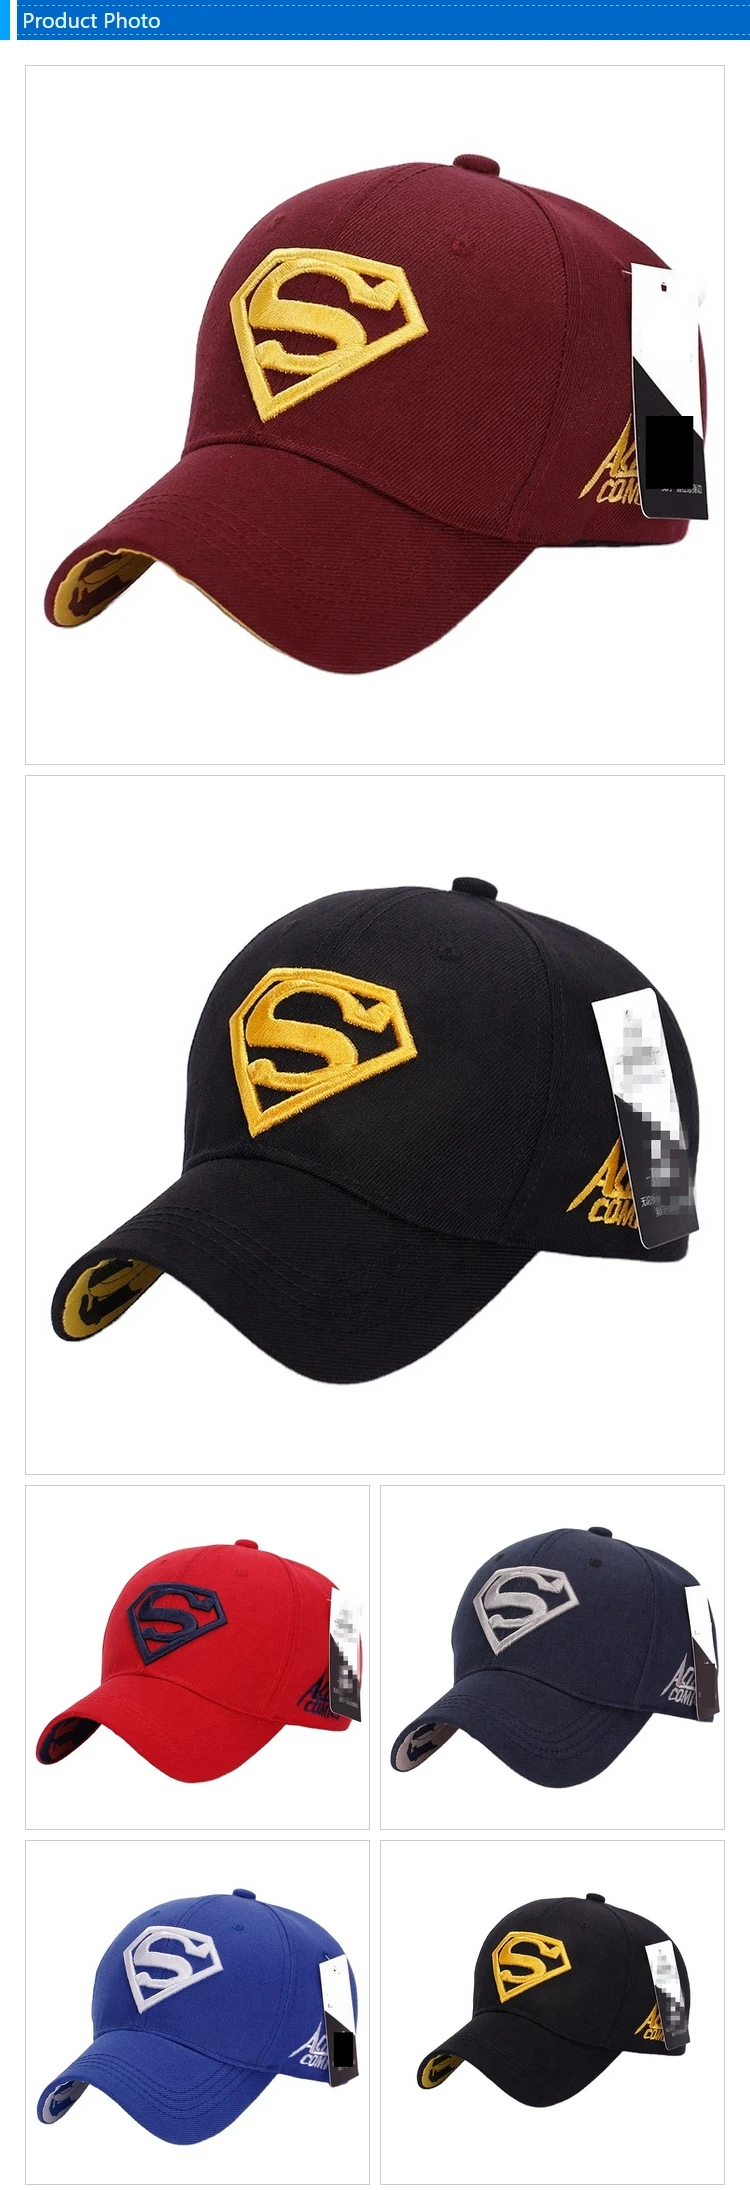 Shengming 2019 Soft Baseball Hats Hats For Men - Buy Soft Baseball Hats ...